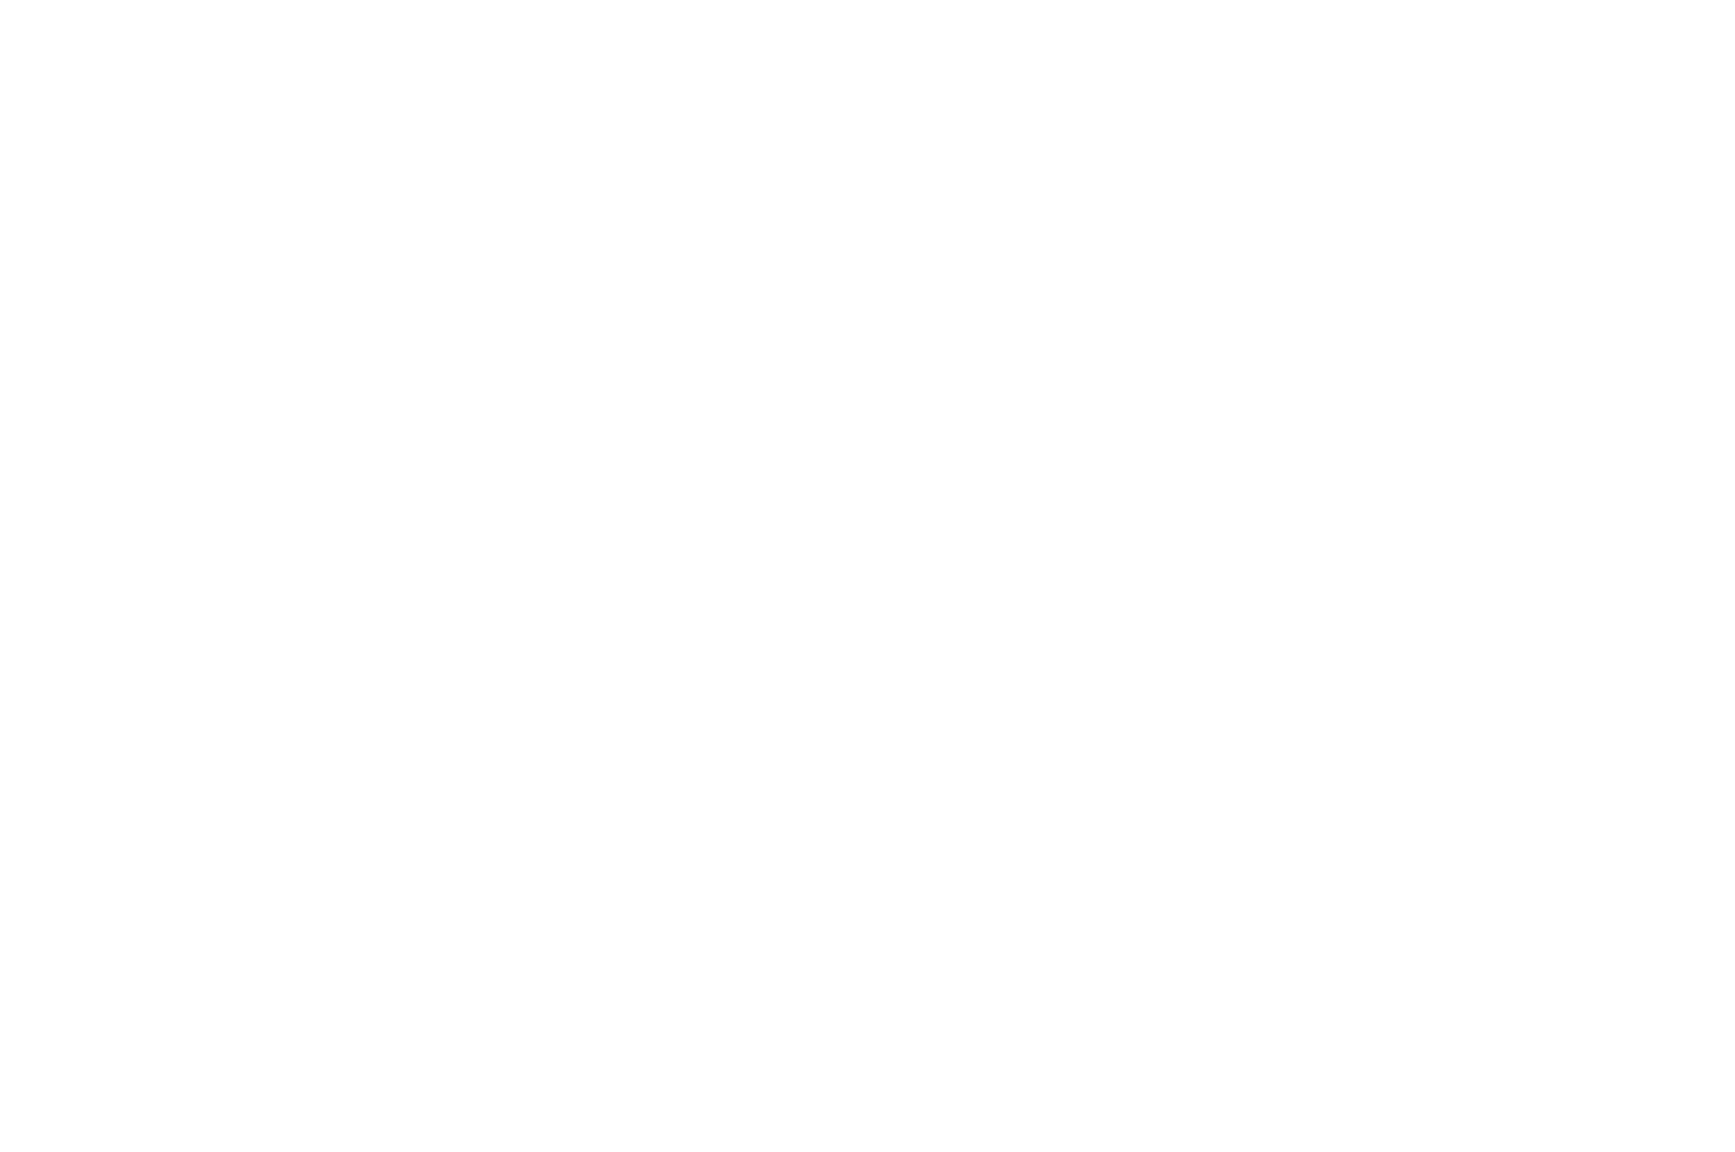 WINNER - Audience Choice Award - GI Film Festival San Diego - 2017_white.png